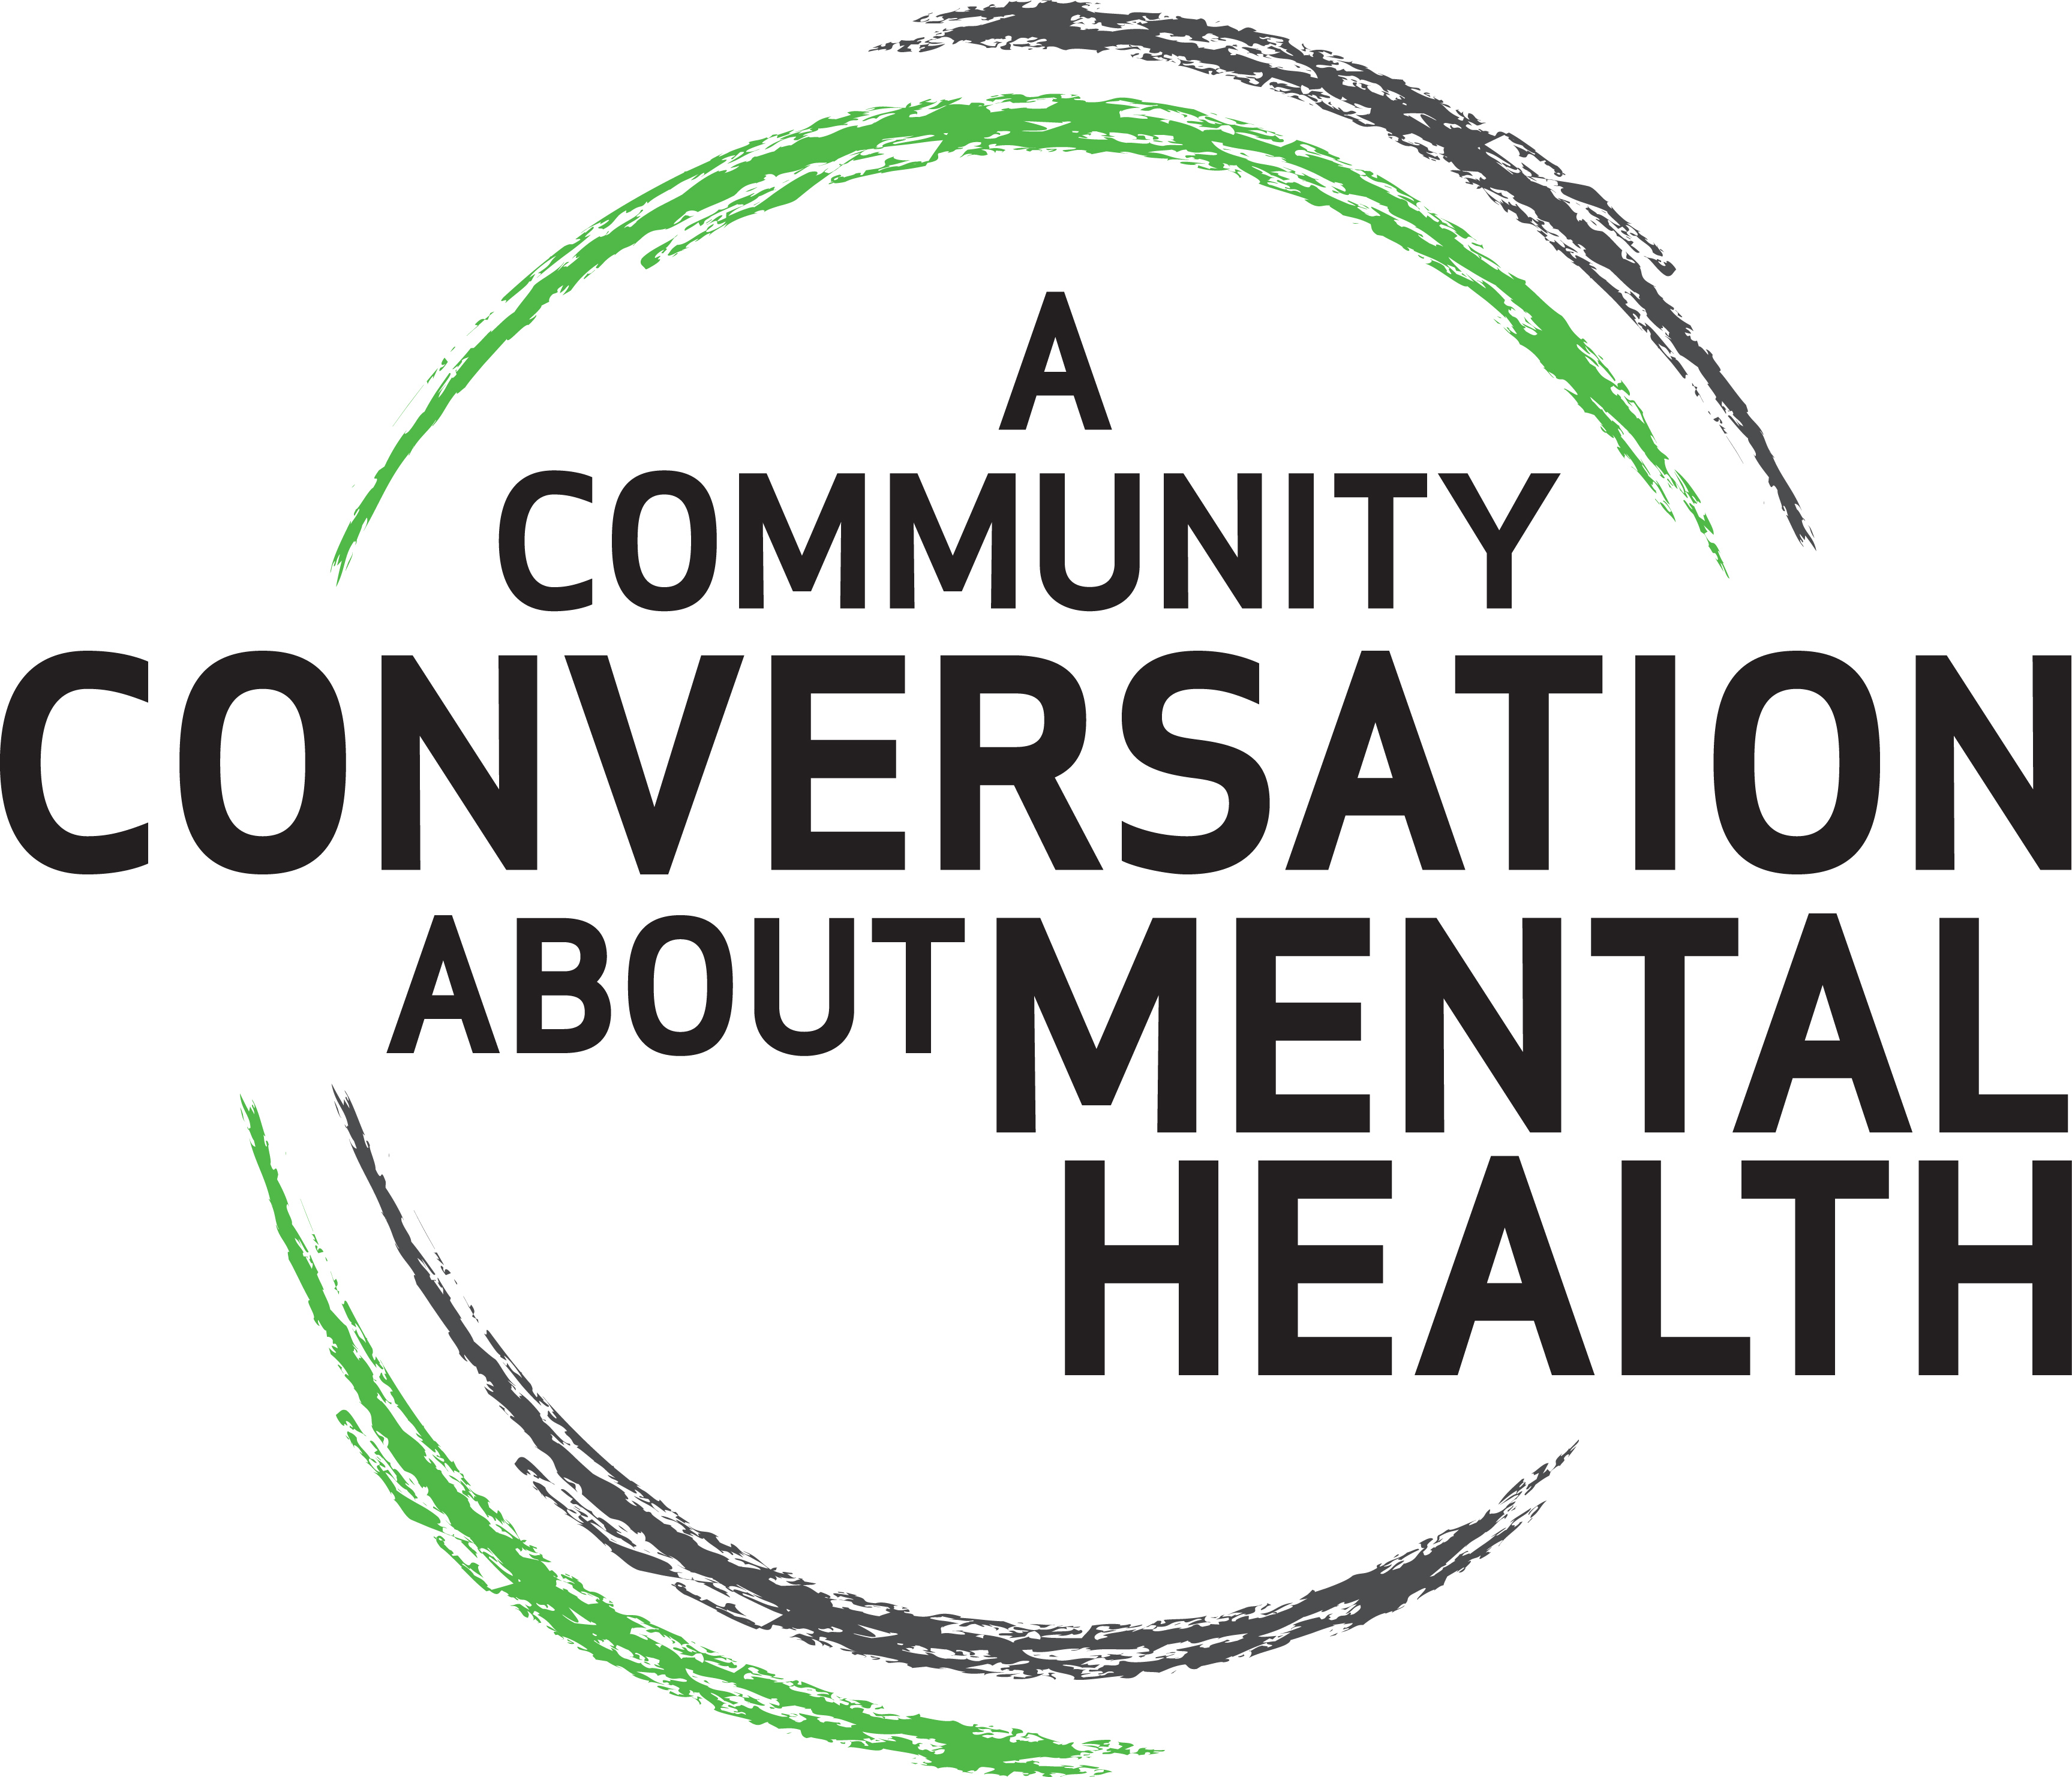 A Community Conversation About Mental Health